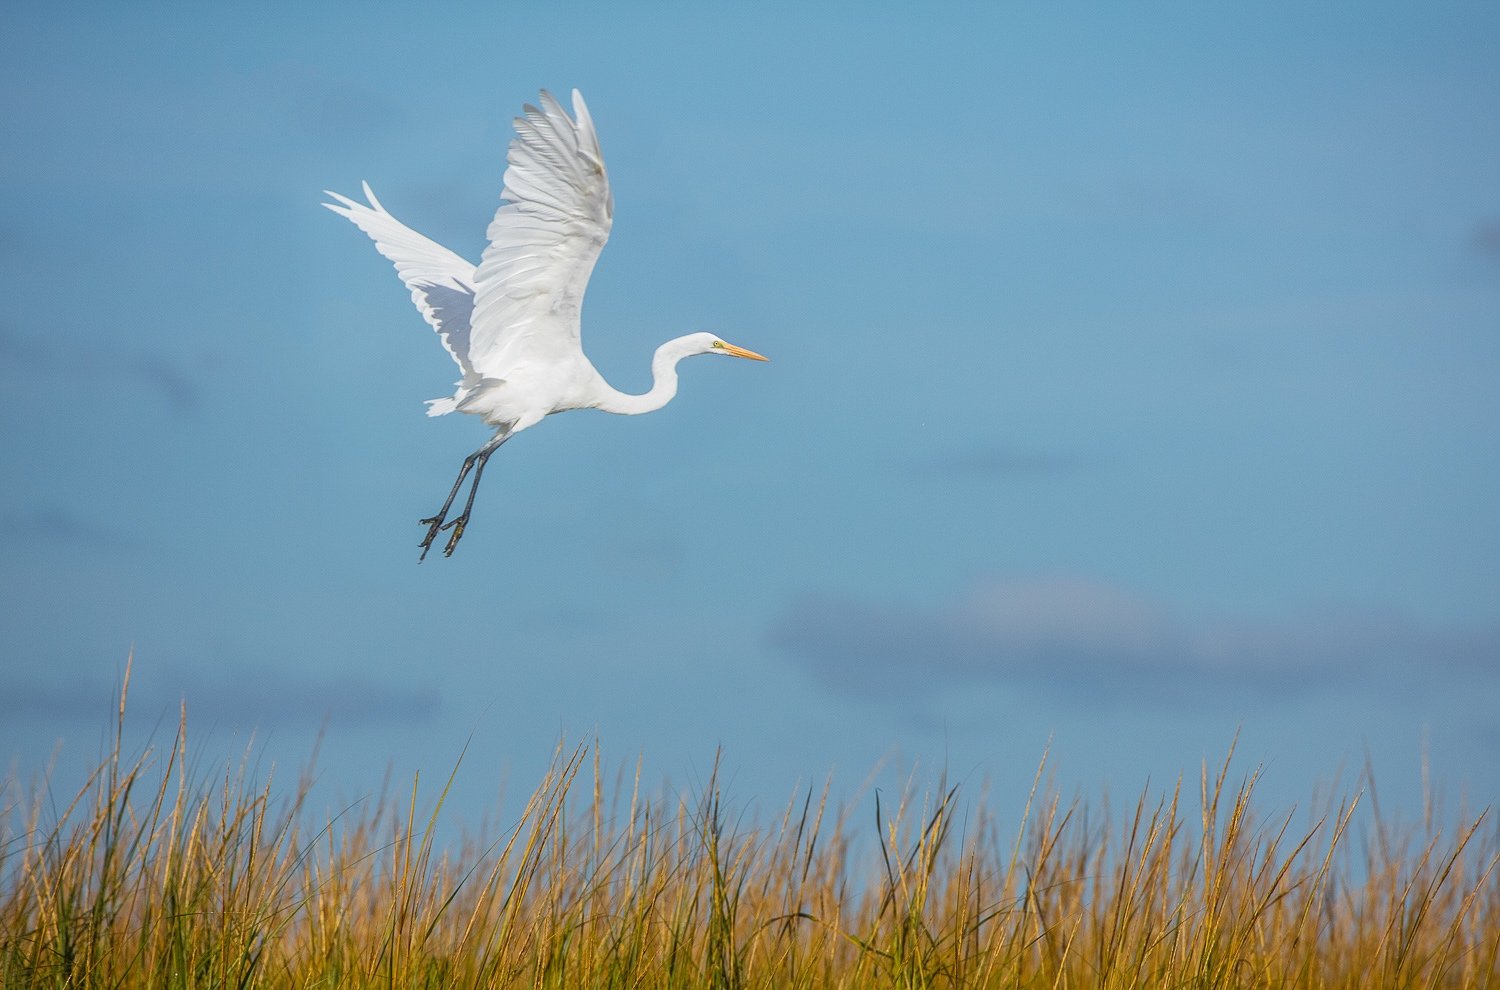  Great White Egret in flight 